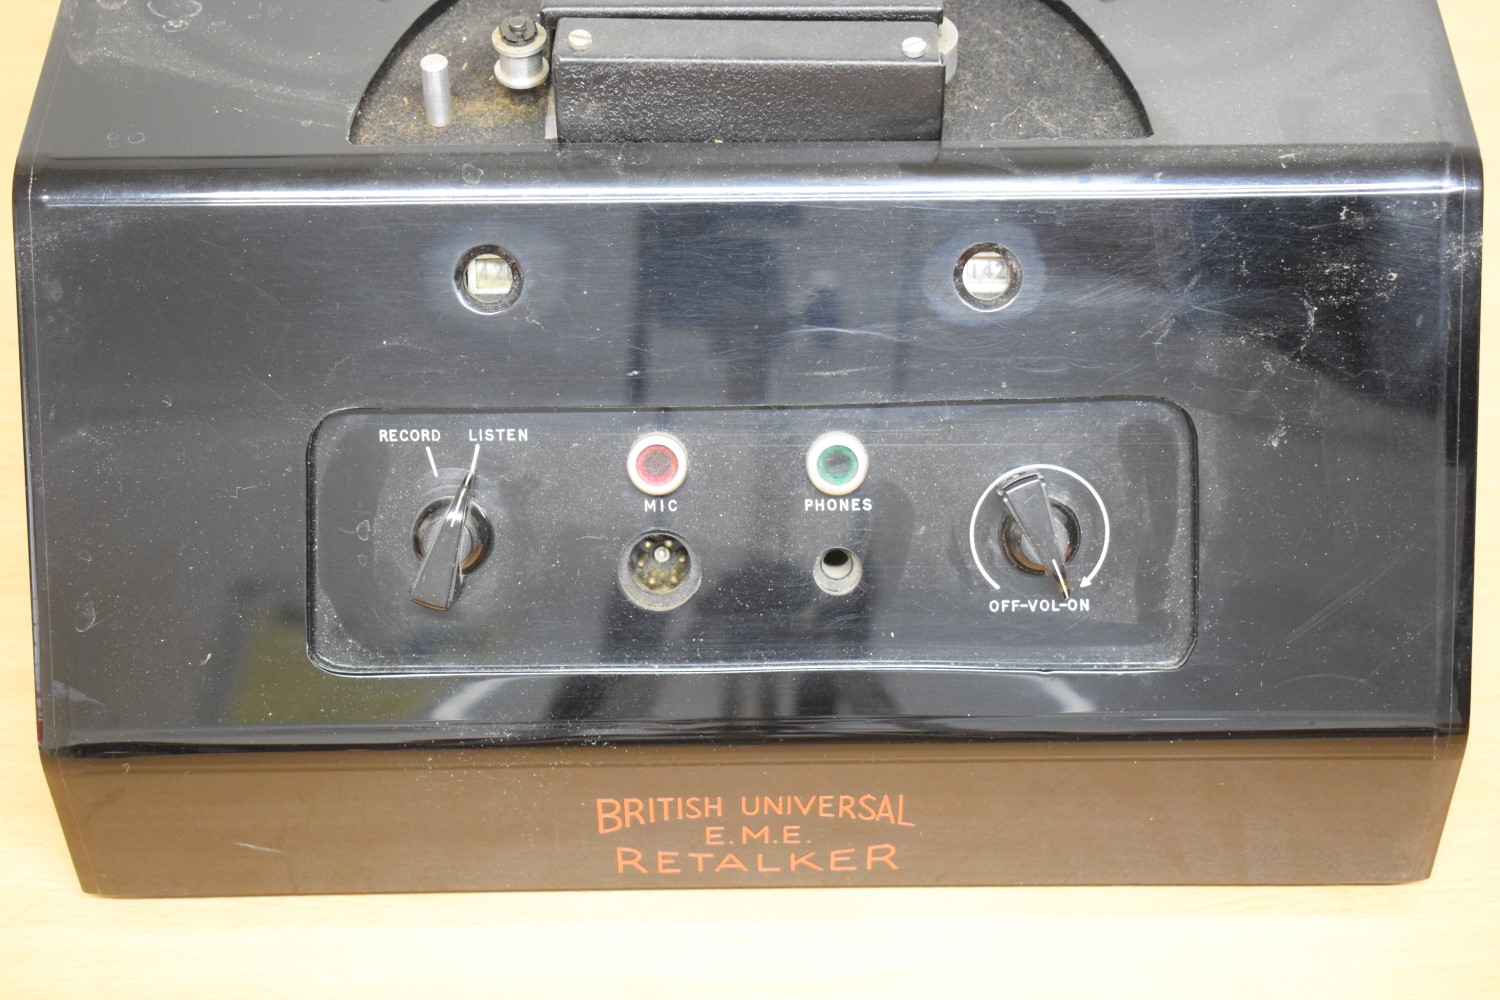 British Universal E.M.E. Retalker Dictaphone